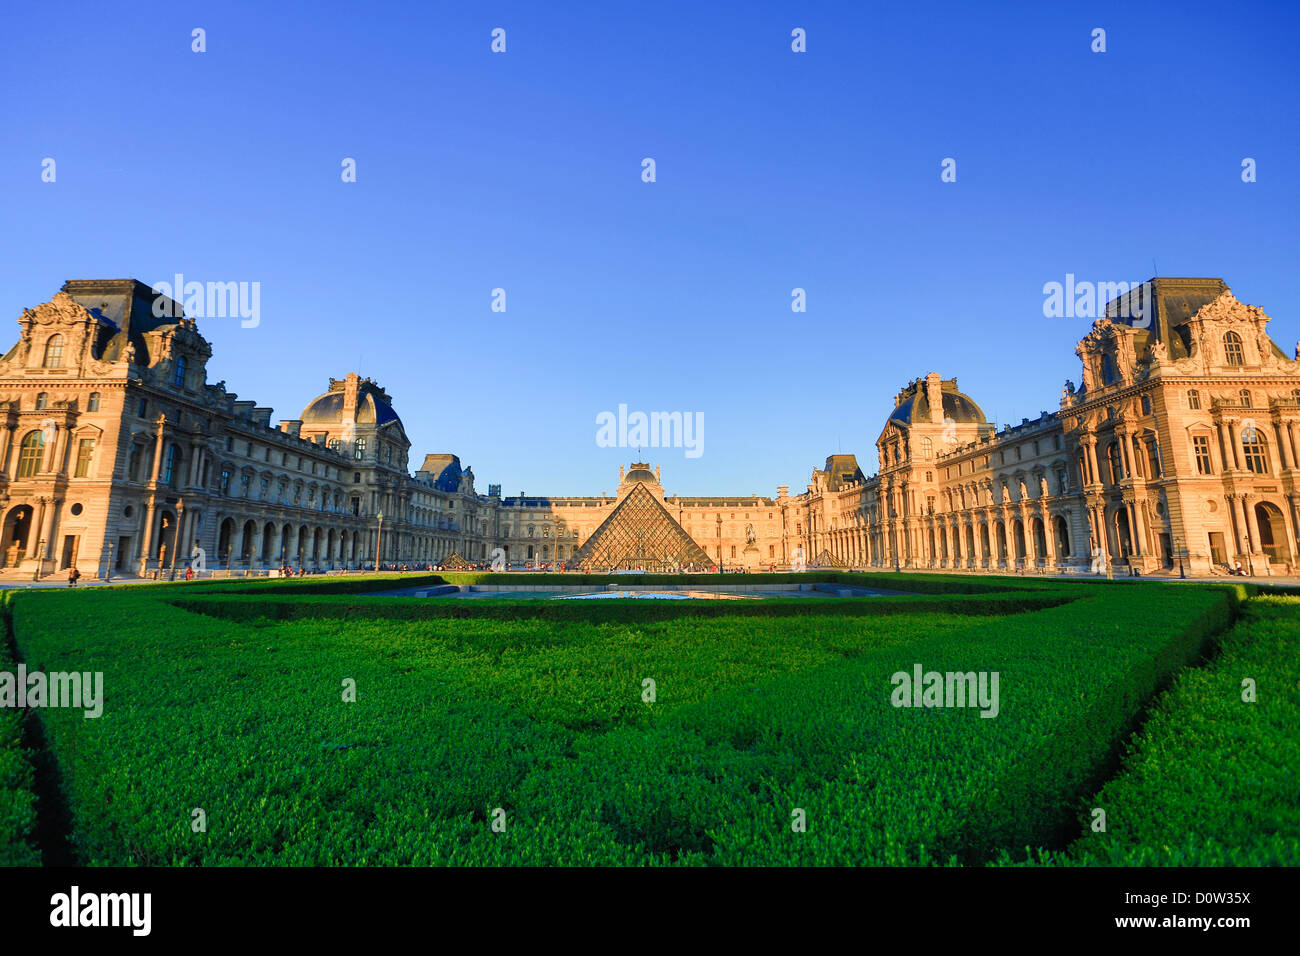 France, Europe, travel, Paris, City, Louvre, Museum, Pyramid, arch, architecture, art, artistic, monument, monumental, skyline Stock Photo